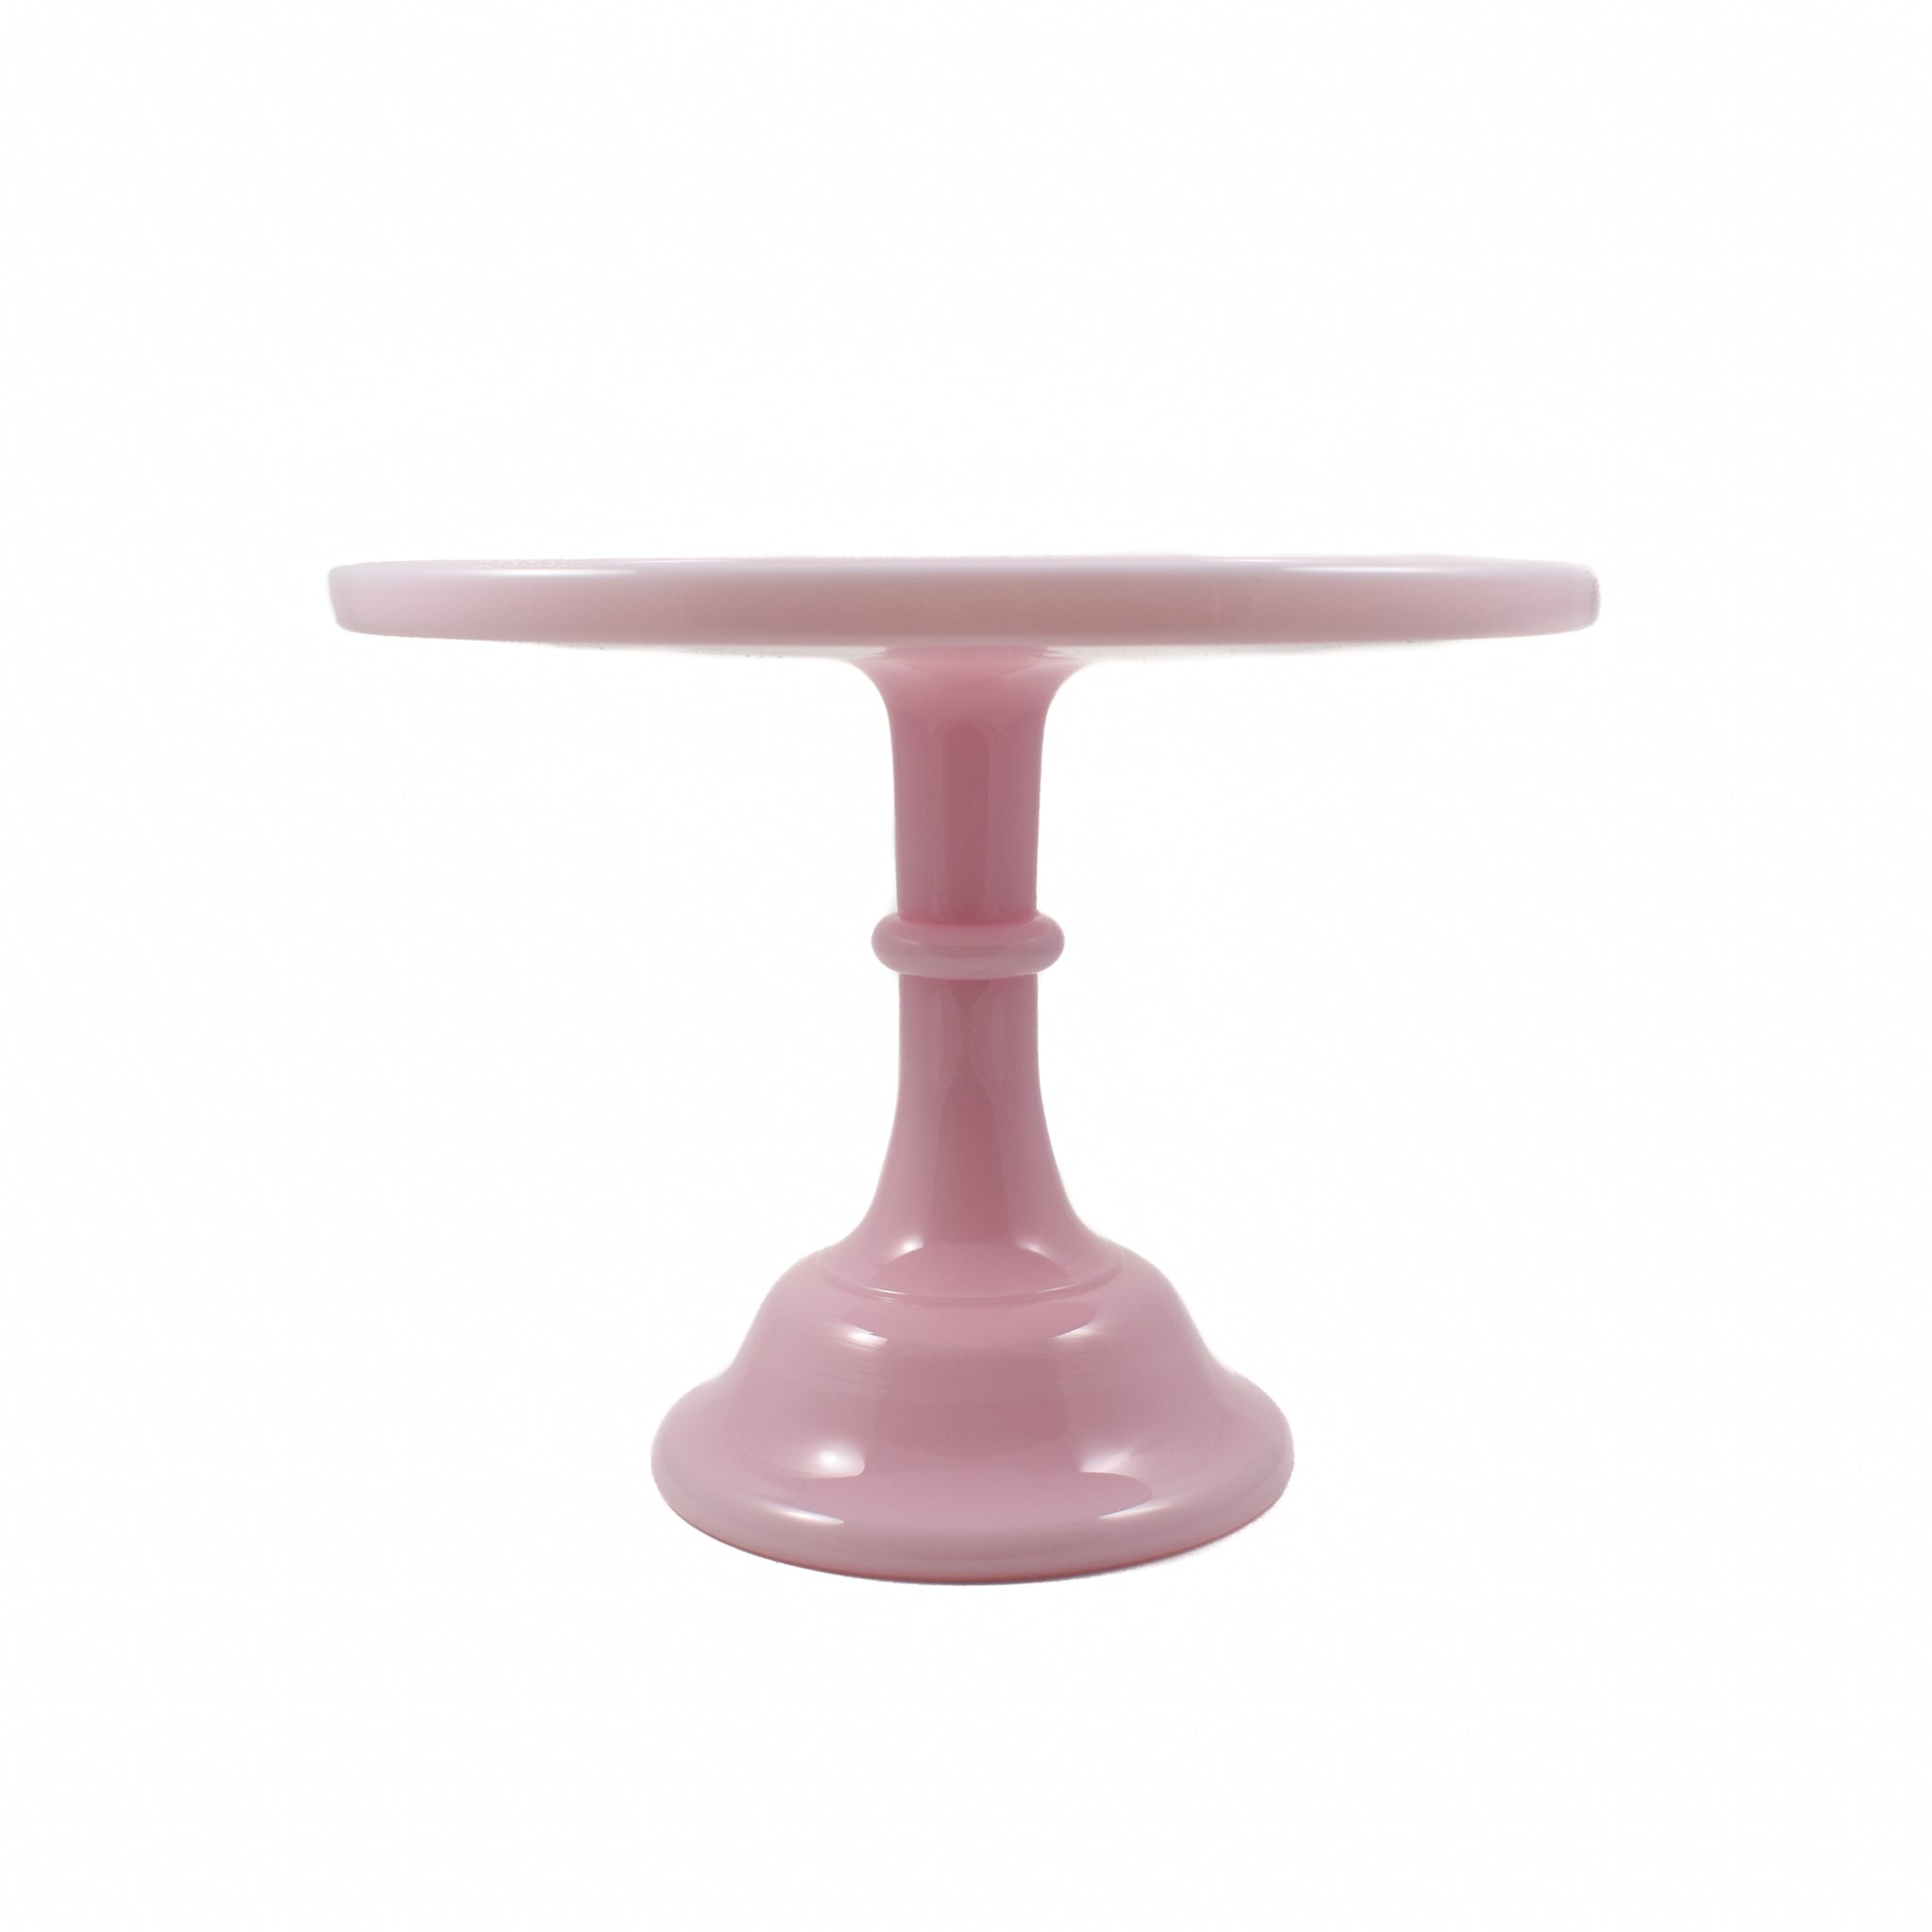 Mosser Glass Pink Milk Glass Cake Stand 10" Tableware Jugs & Glassware